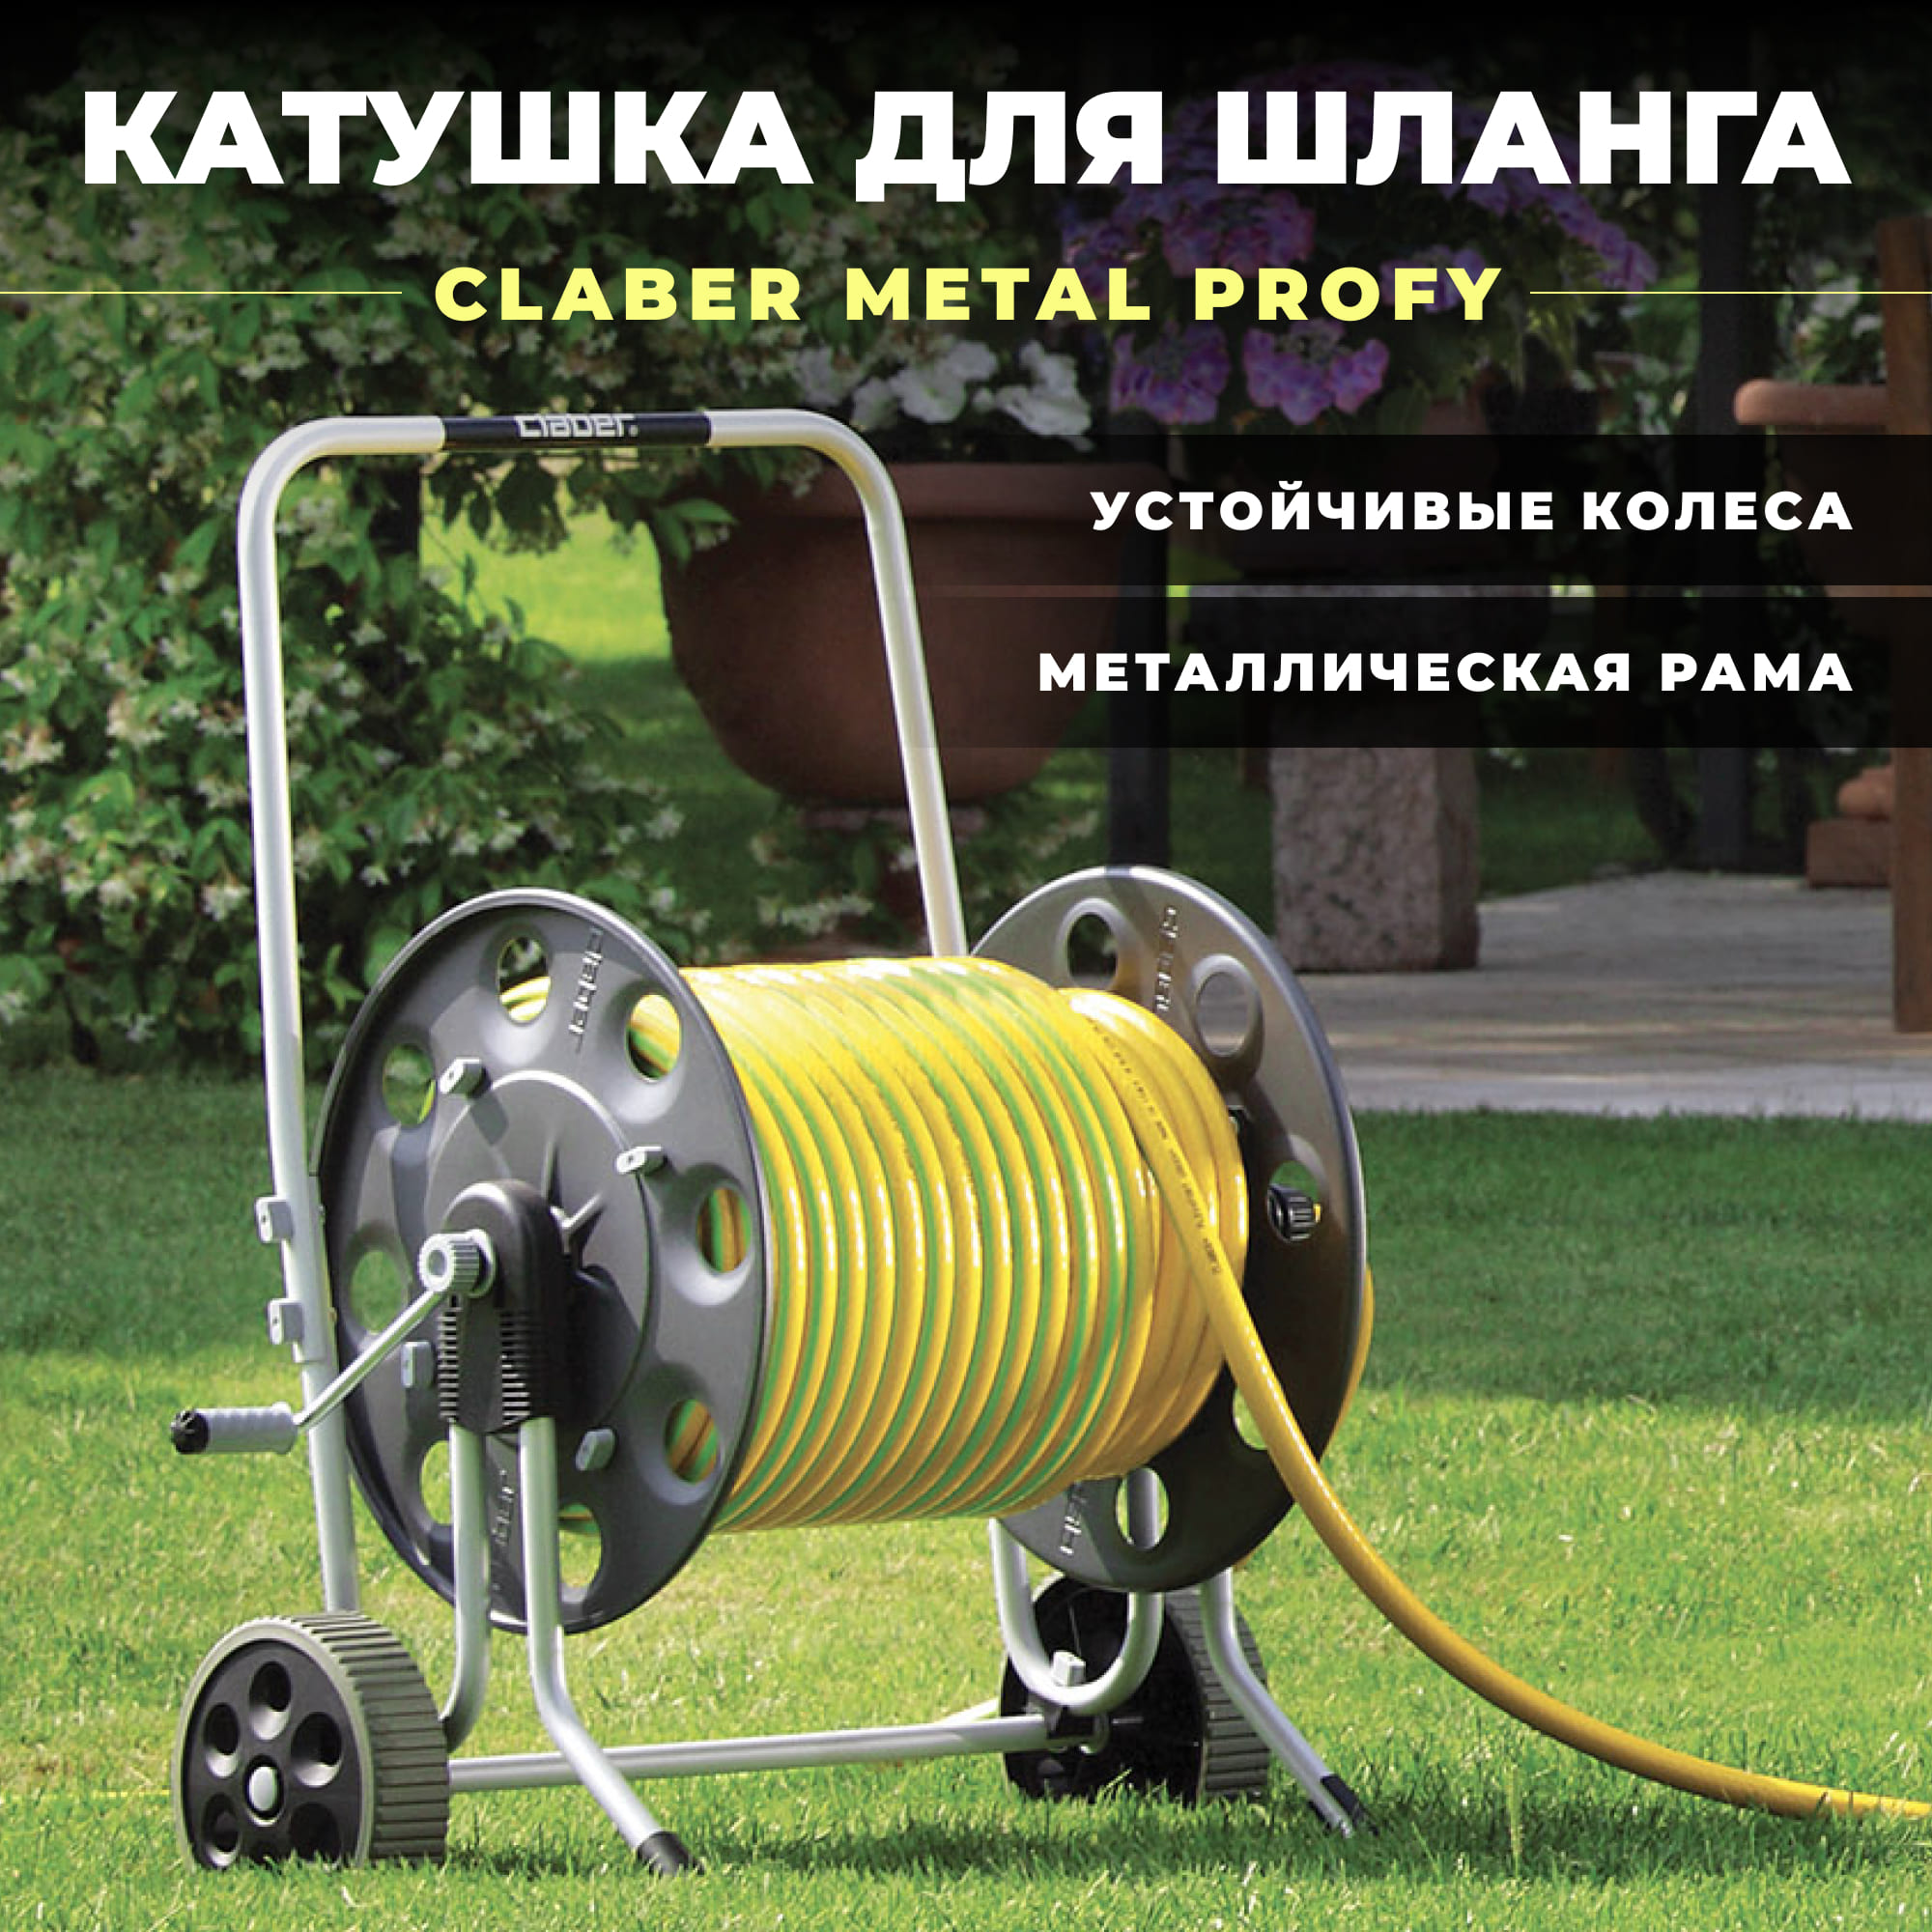 Катушка для шланга Claber metal profy 72х47х90 см - фото 2